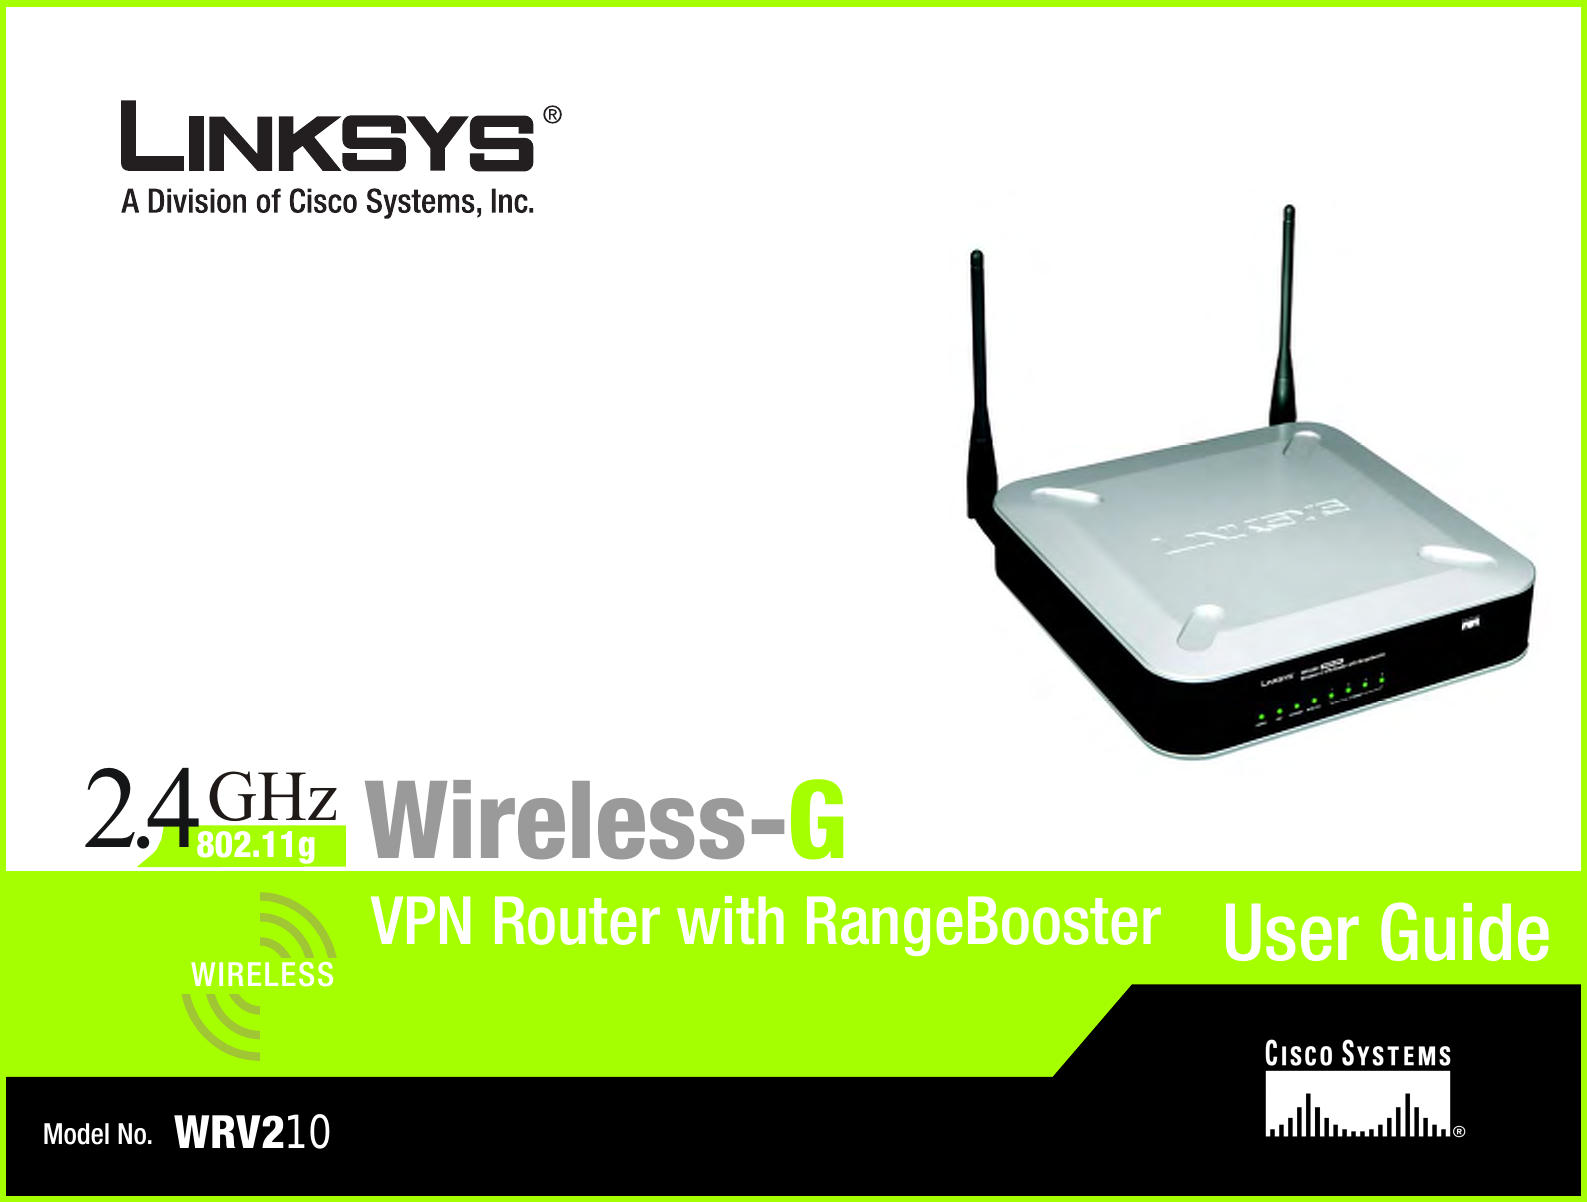 Model No.VPN Router with RangeBoosterWireless-GWRV210WIRELESSGHz2.4802.11gUser Guide